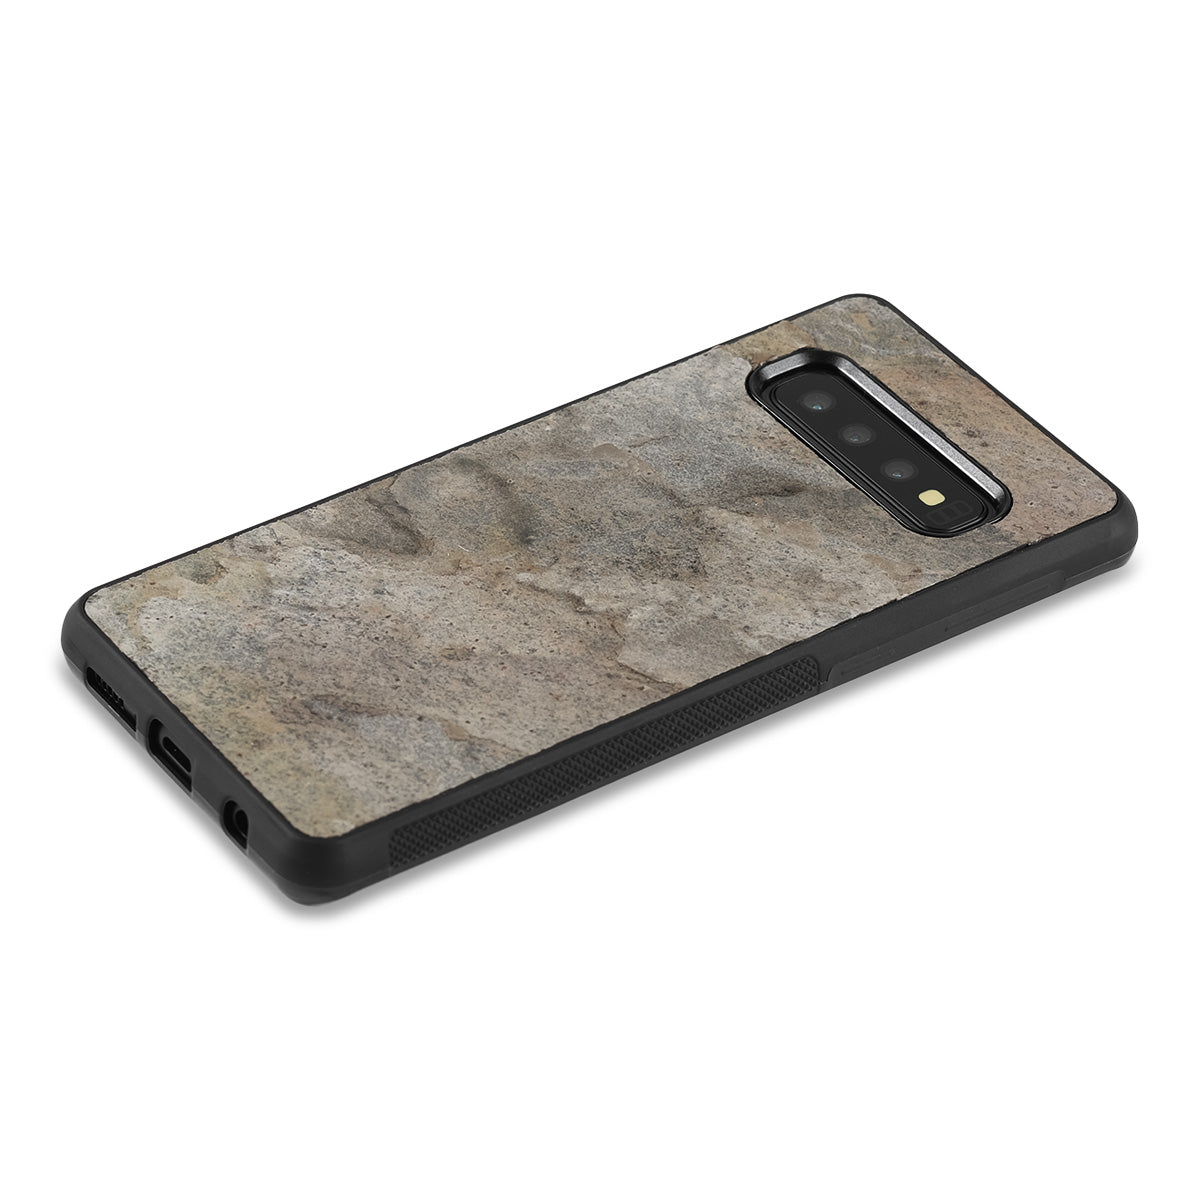 Samsung Galaxy S10 —  Stone Explorer Case